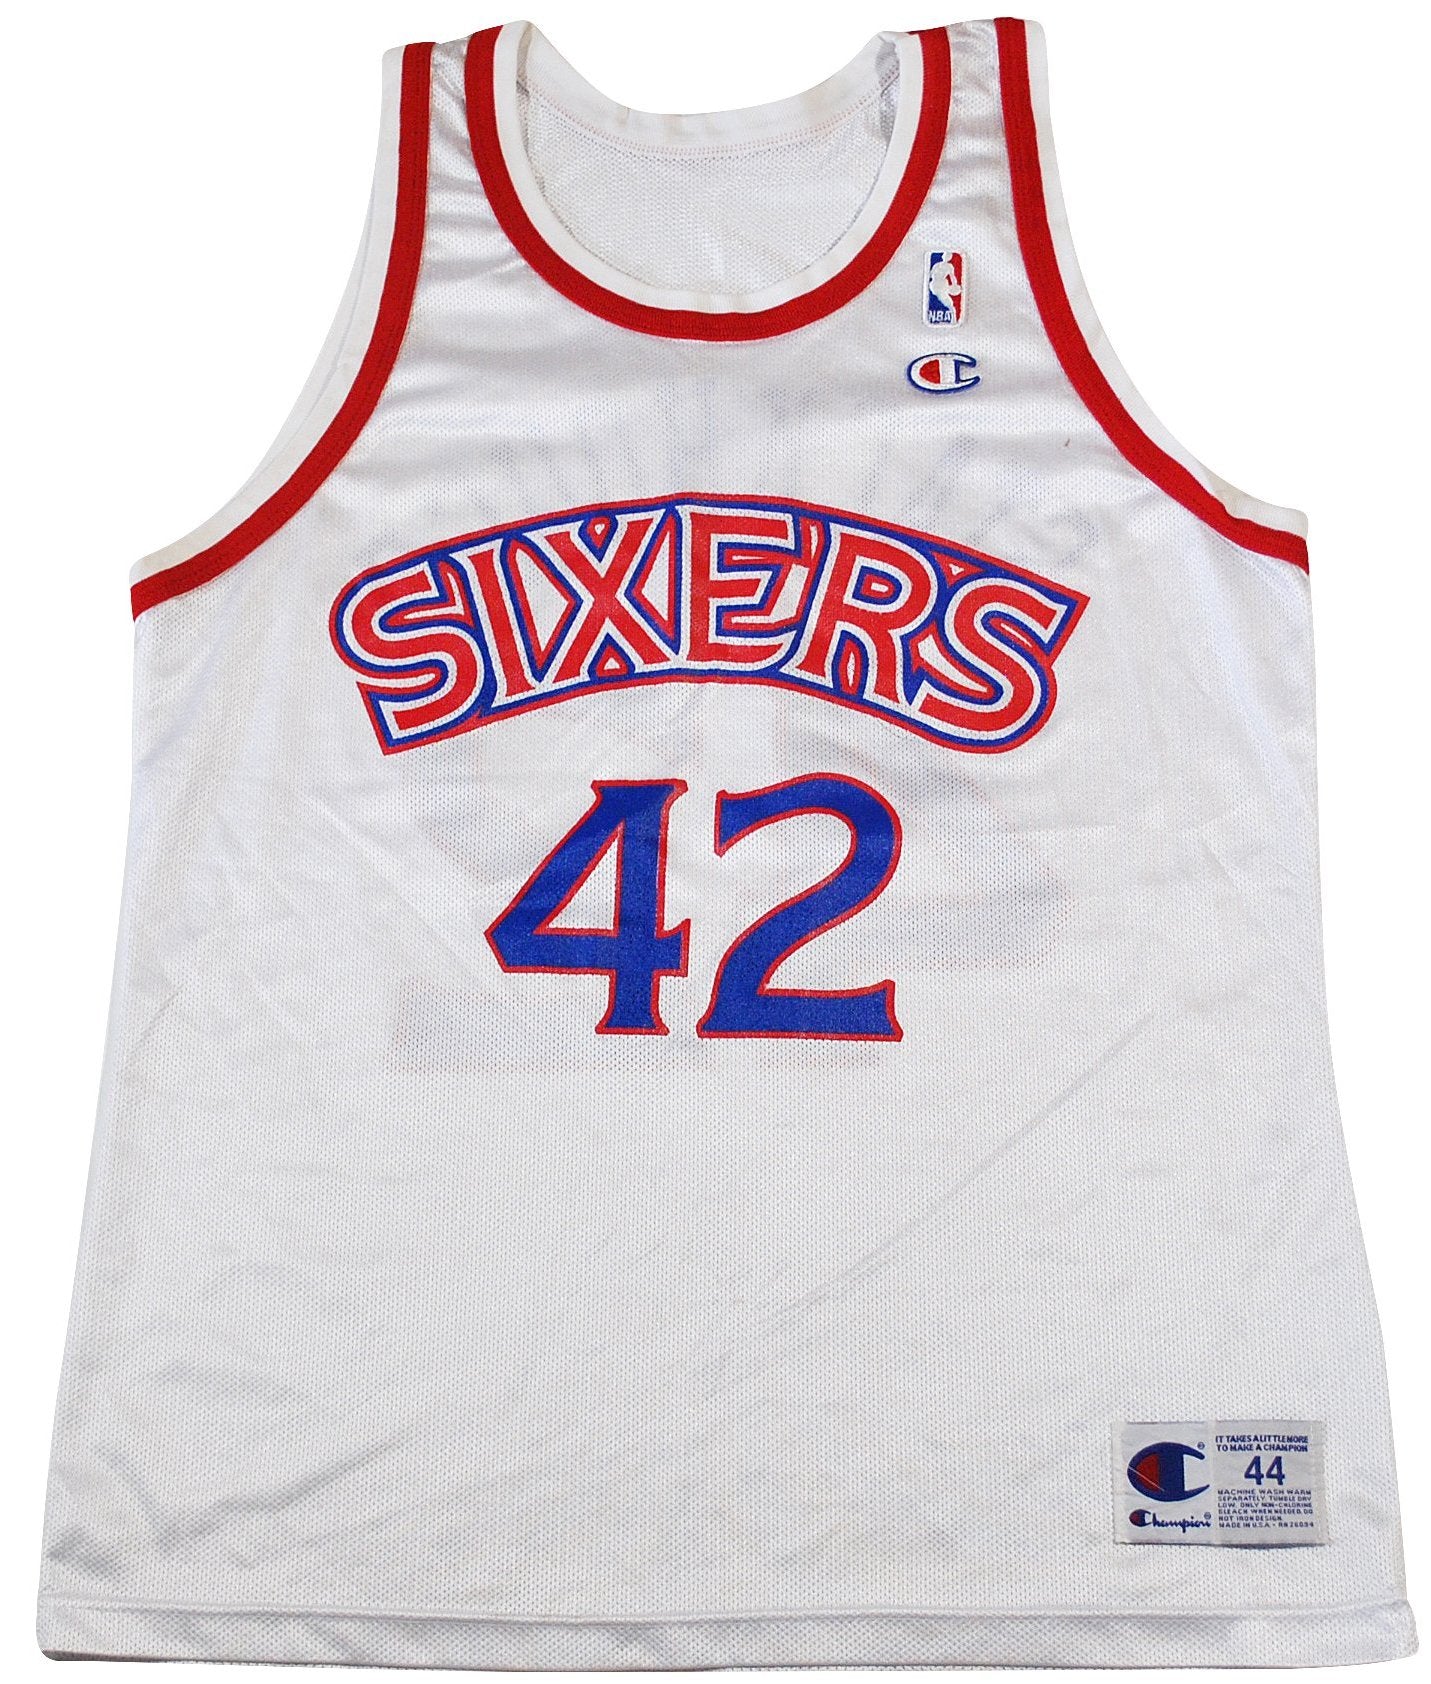 Jerry Stackhouse Detroit Pistons NBA Vintage Champion Jersey Youth Size M 10-12